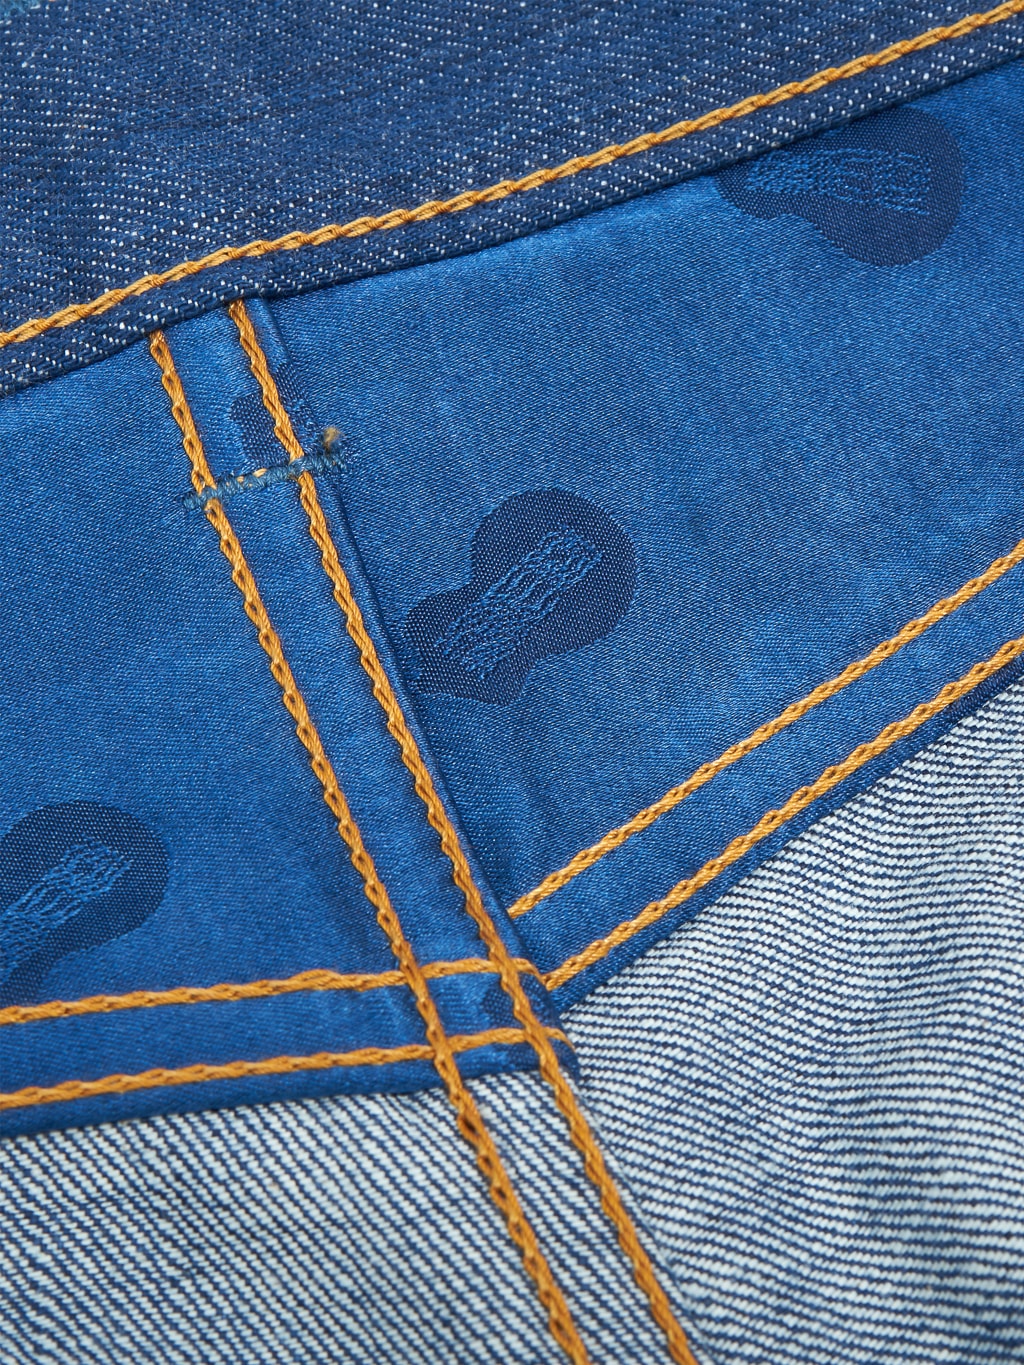 momotaro 0605 ai natural indigo dyed natural tapered denim jeans interior